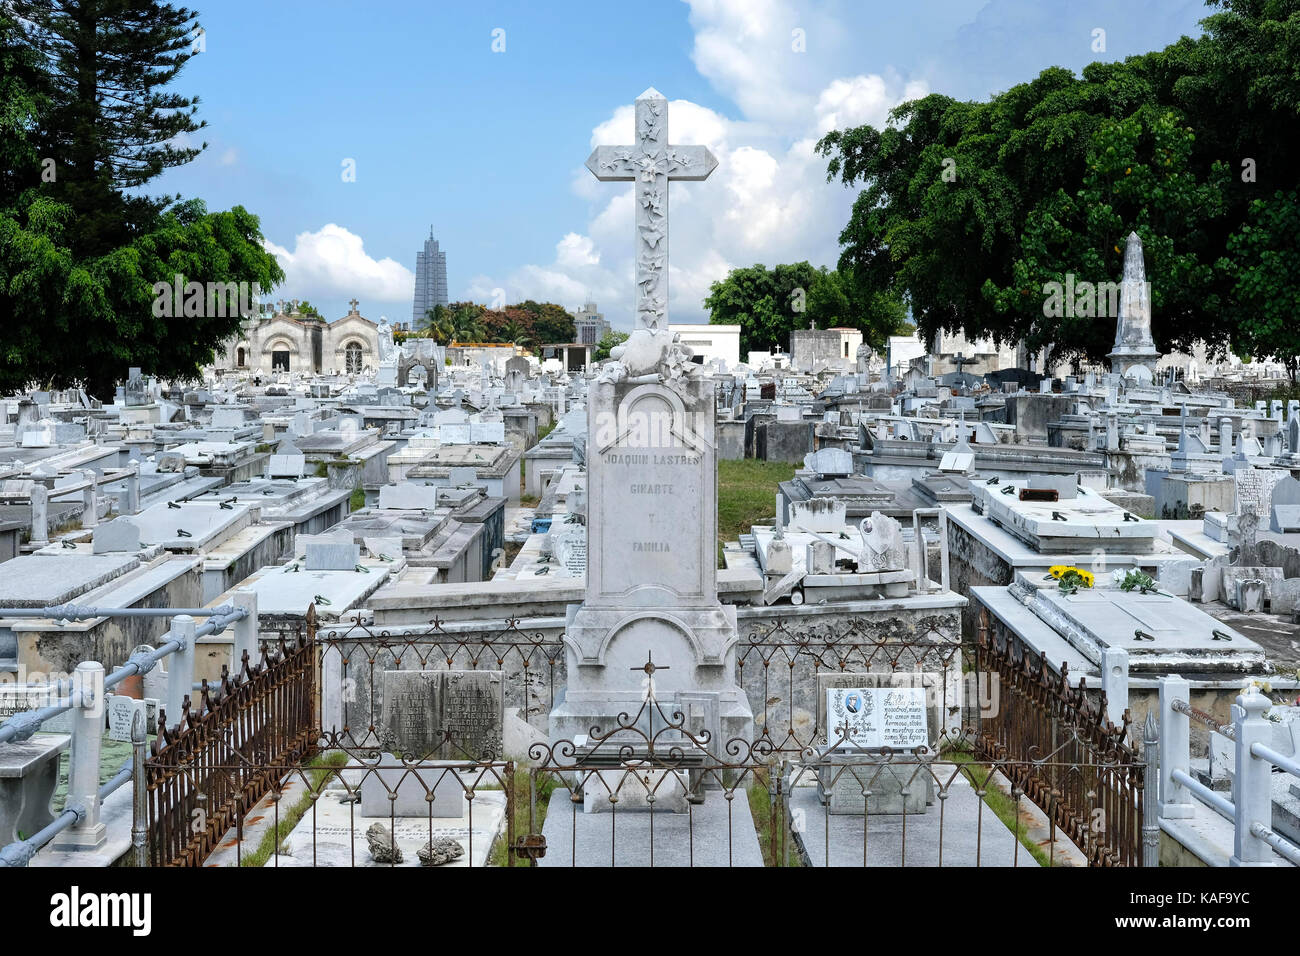 Nekropole von Cristobal Colon (Cementerio de Cristobal Colon) im Stadtteil Vedado von Havanna, Kuba Stockfoto